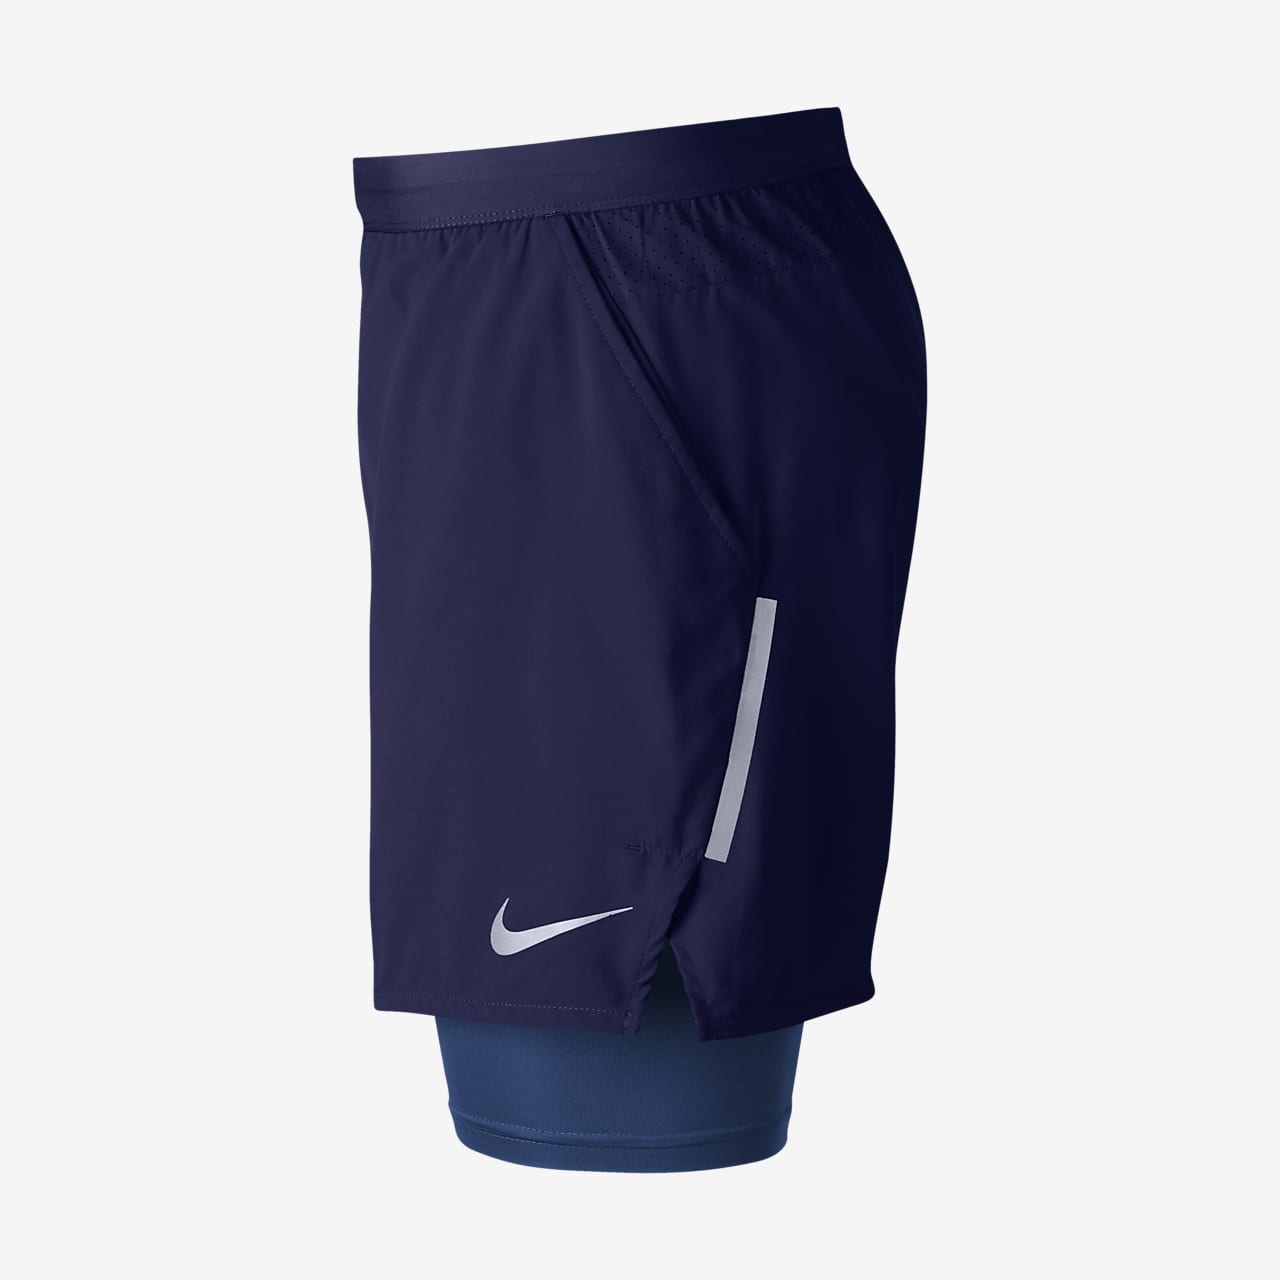 12.5cm approx.) Running Shorts. Nike CZ